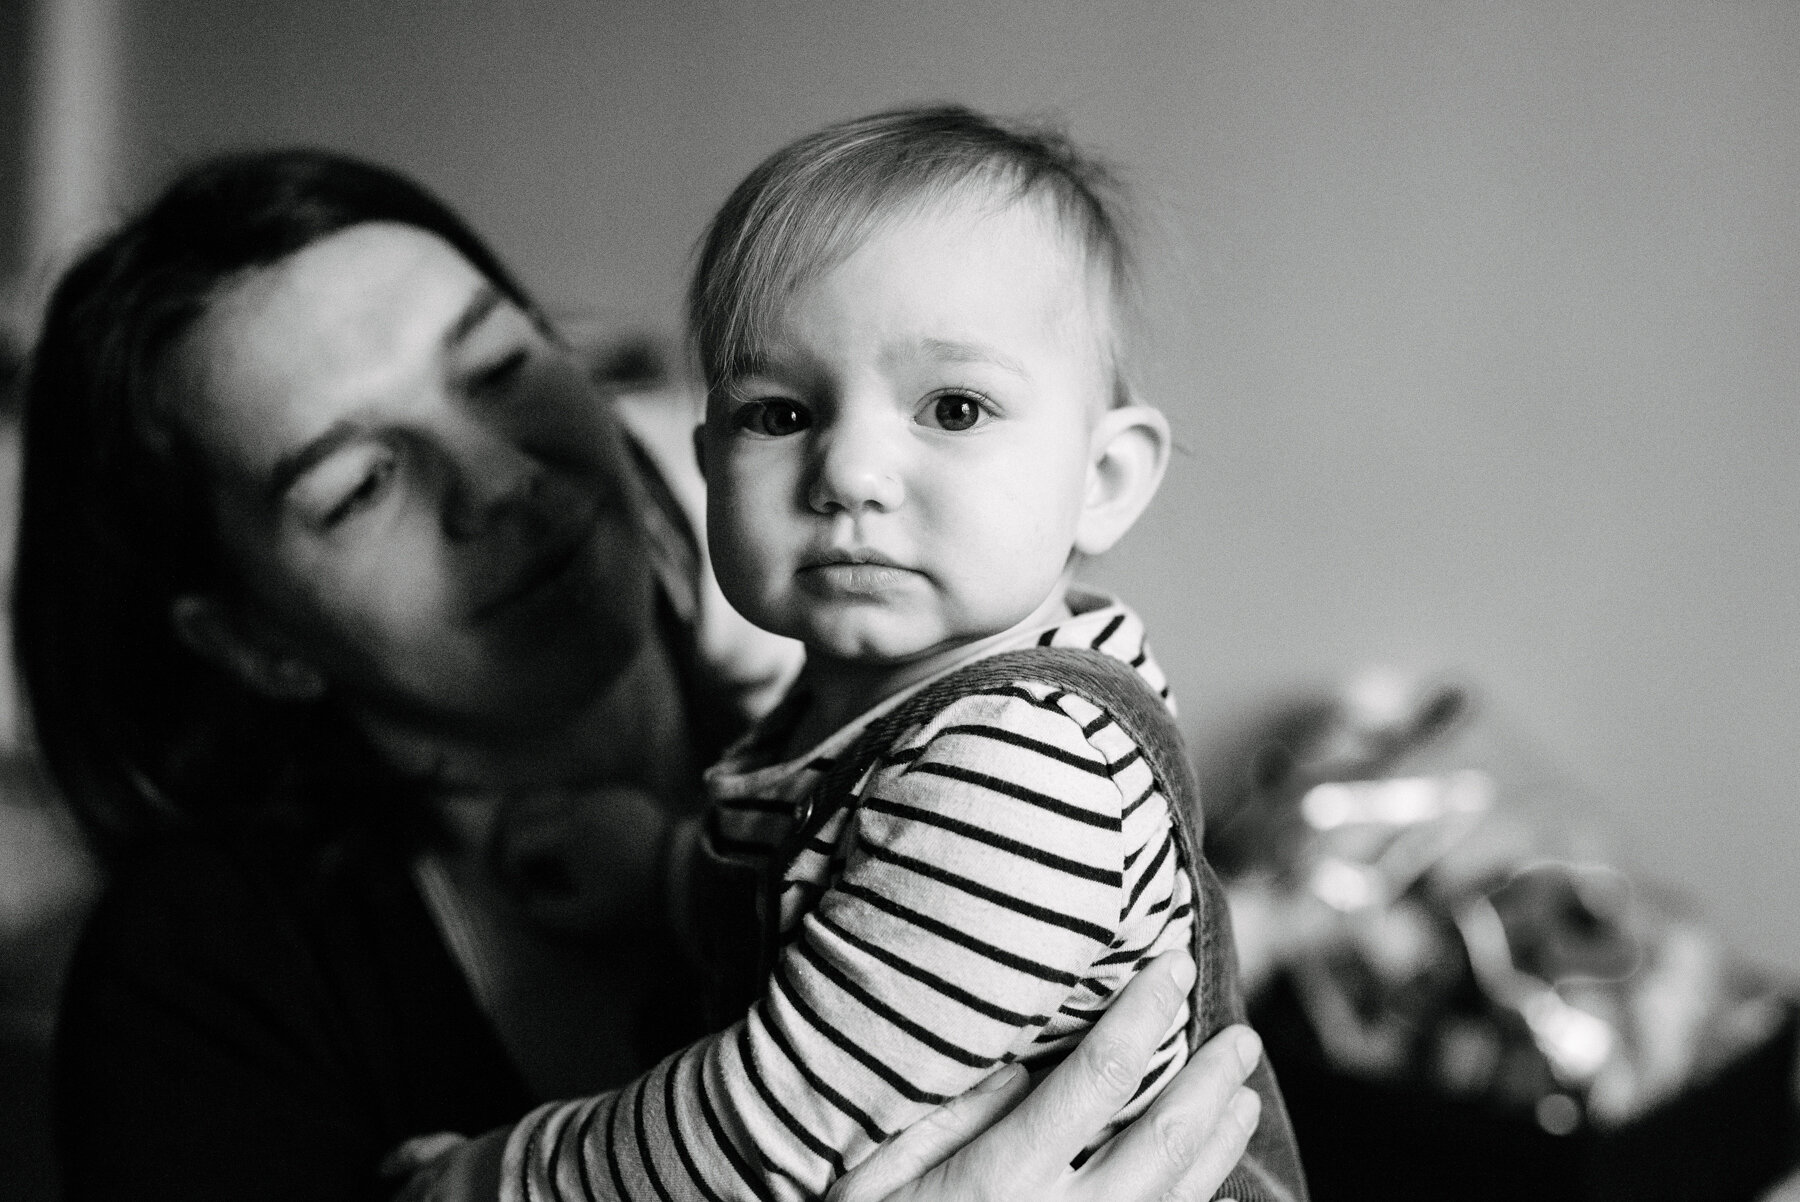 seance-mere-maman-enfant-maternite-allaitement-a-domicile-appartement-montrealais-intimite-photographe-famille-documentaire-a-montreal-marianne-charland-004-2.jpg